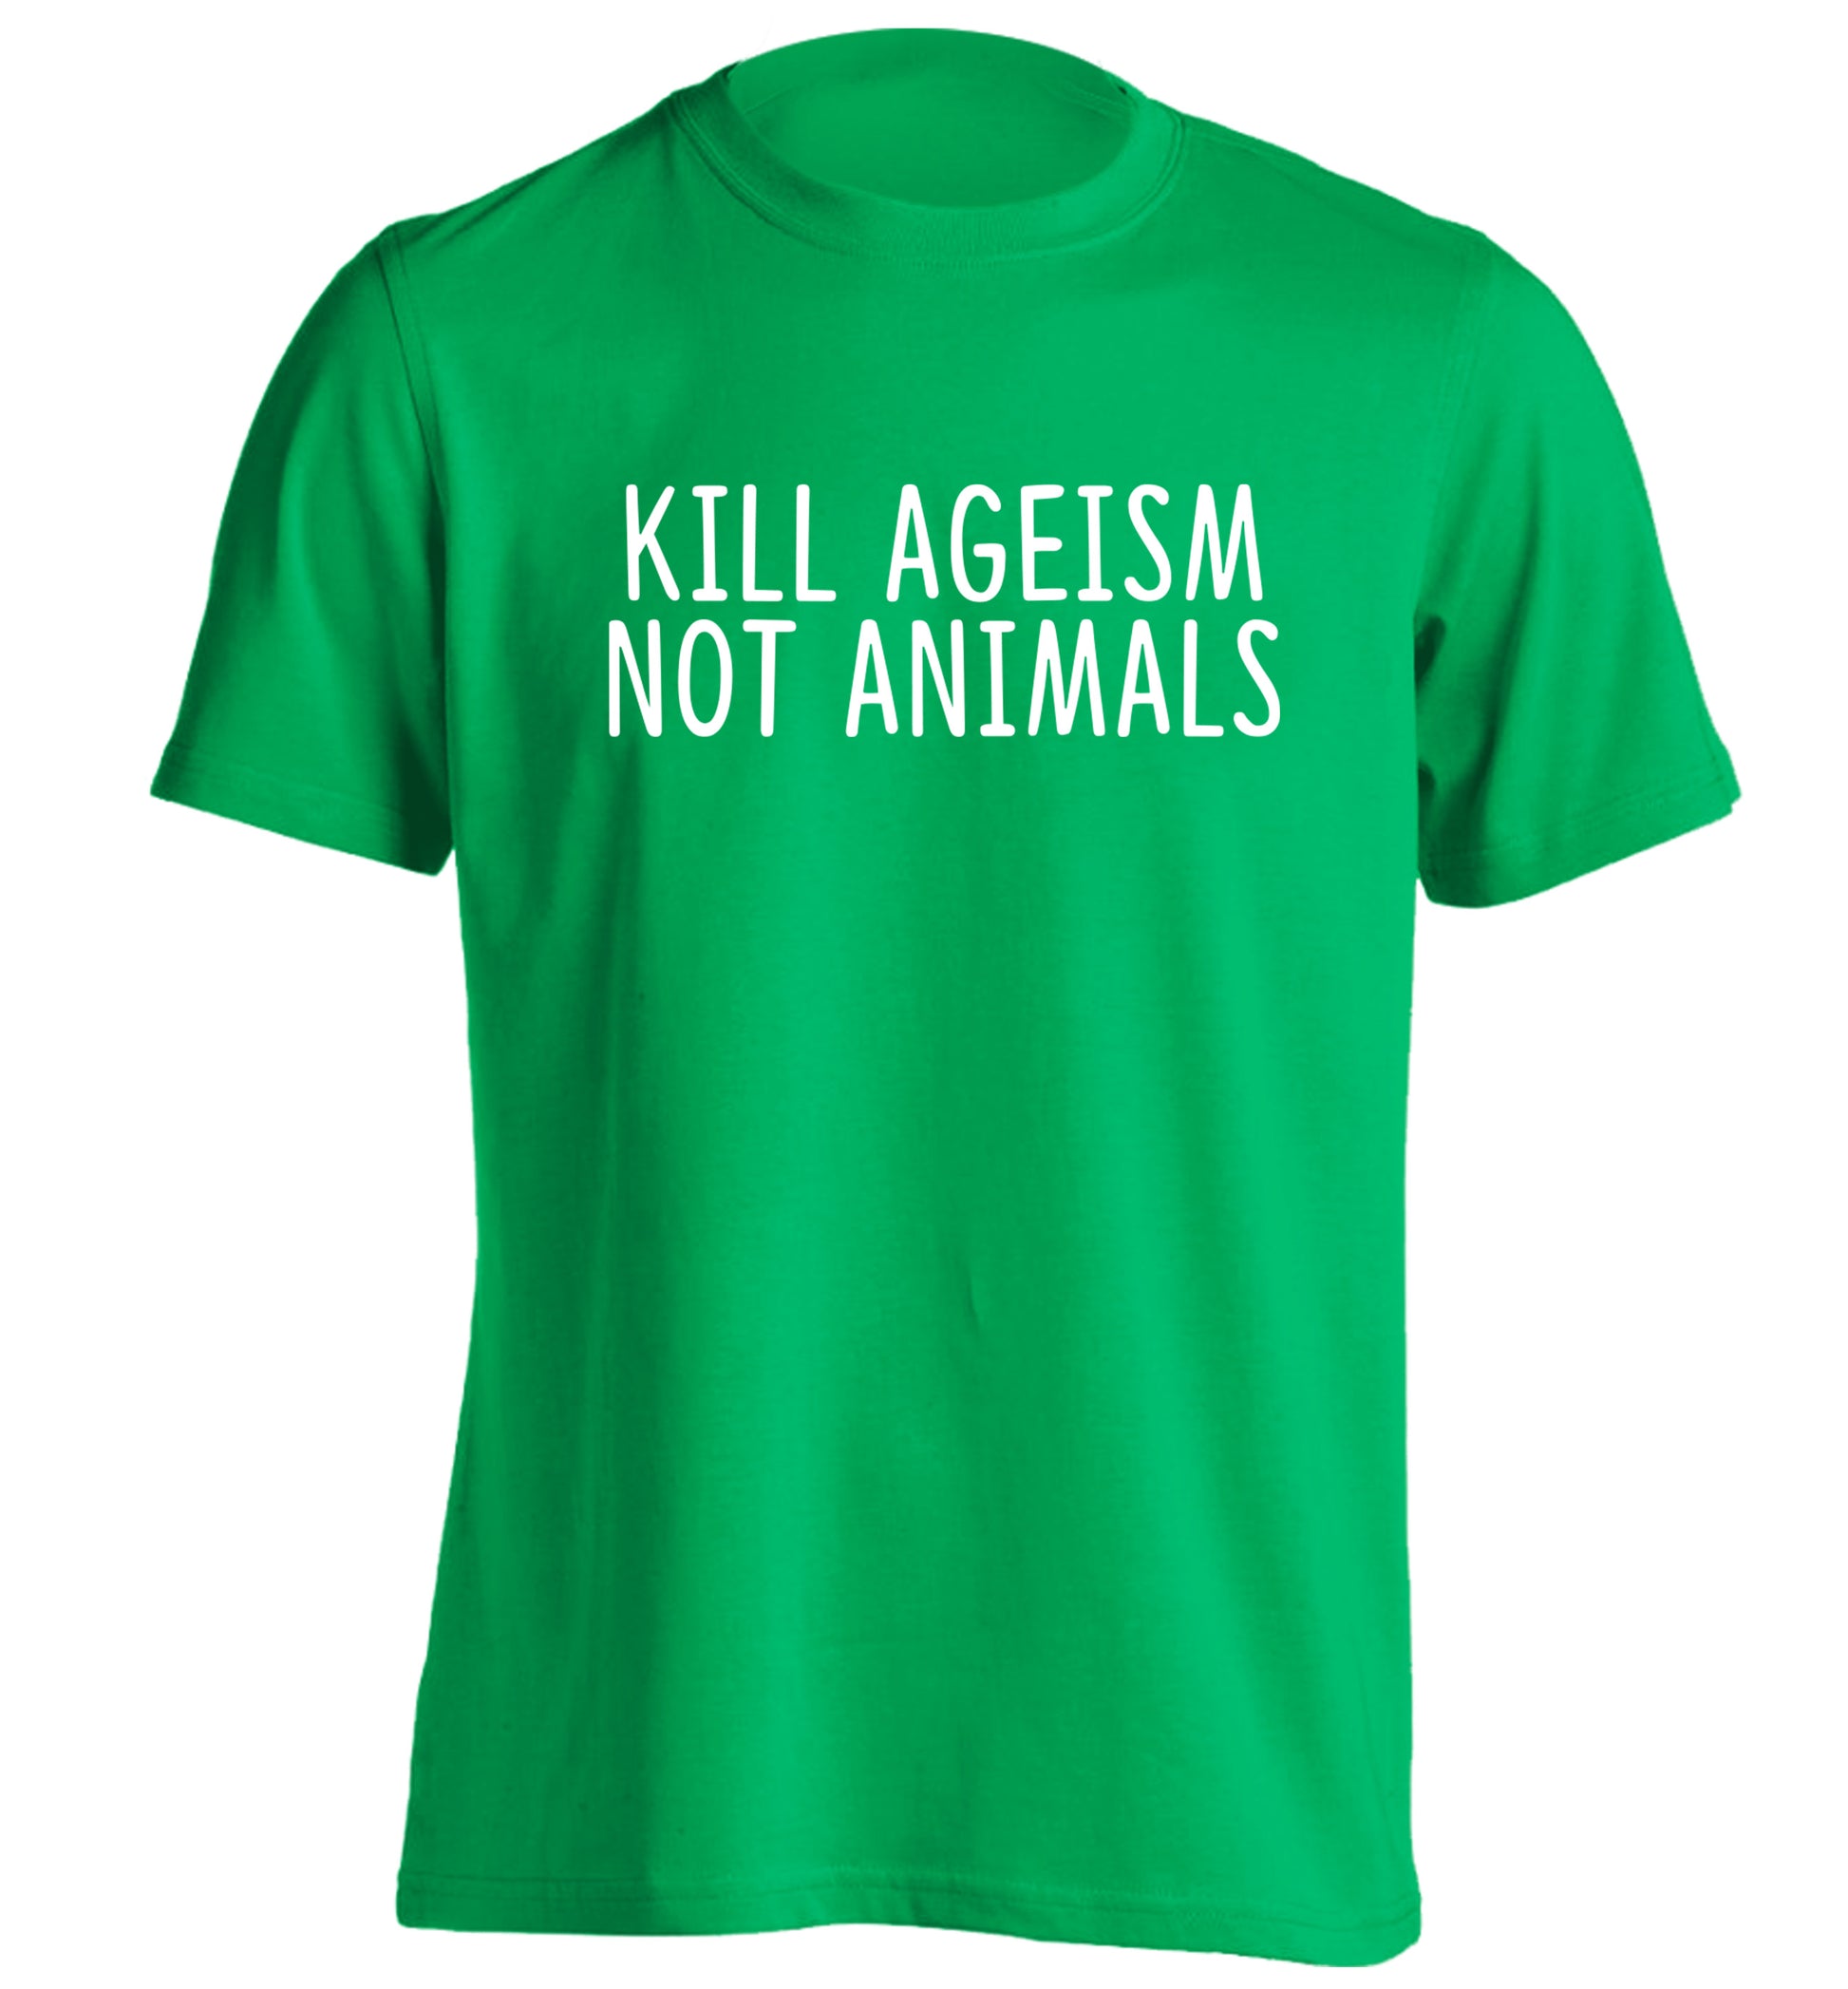 Kill Ageism Not Animals adults unisex green Tshirt 2XL